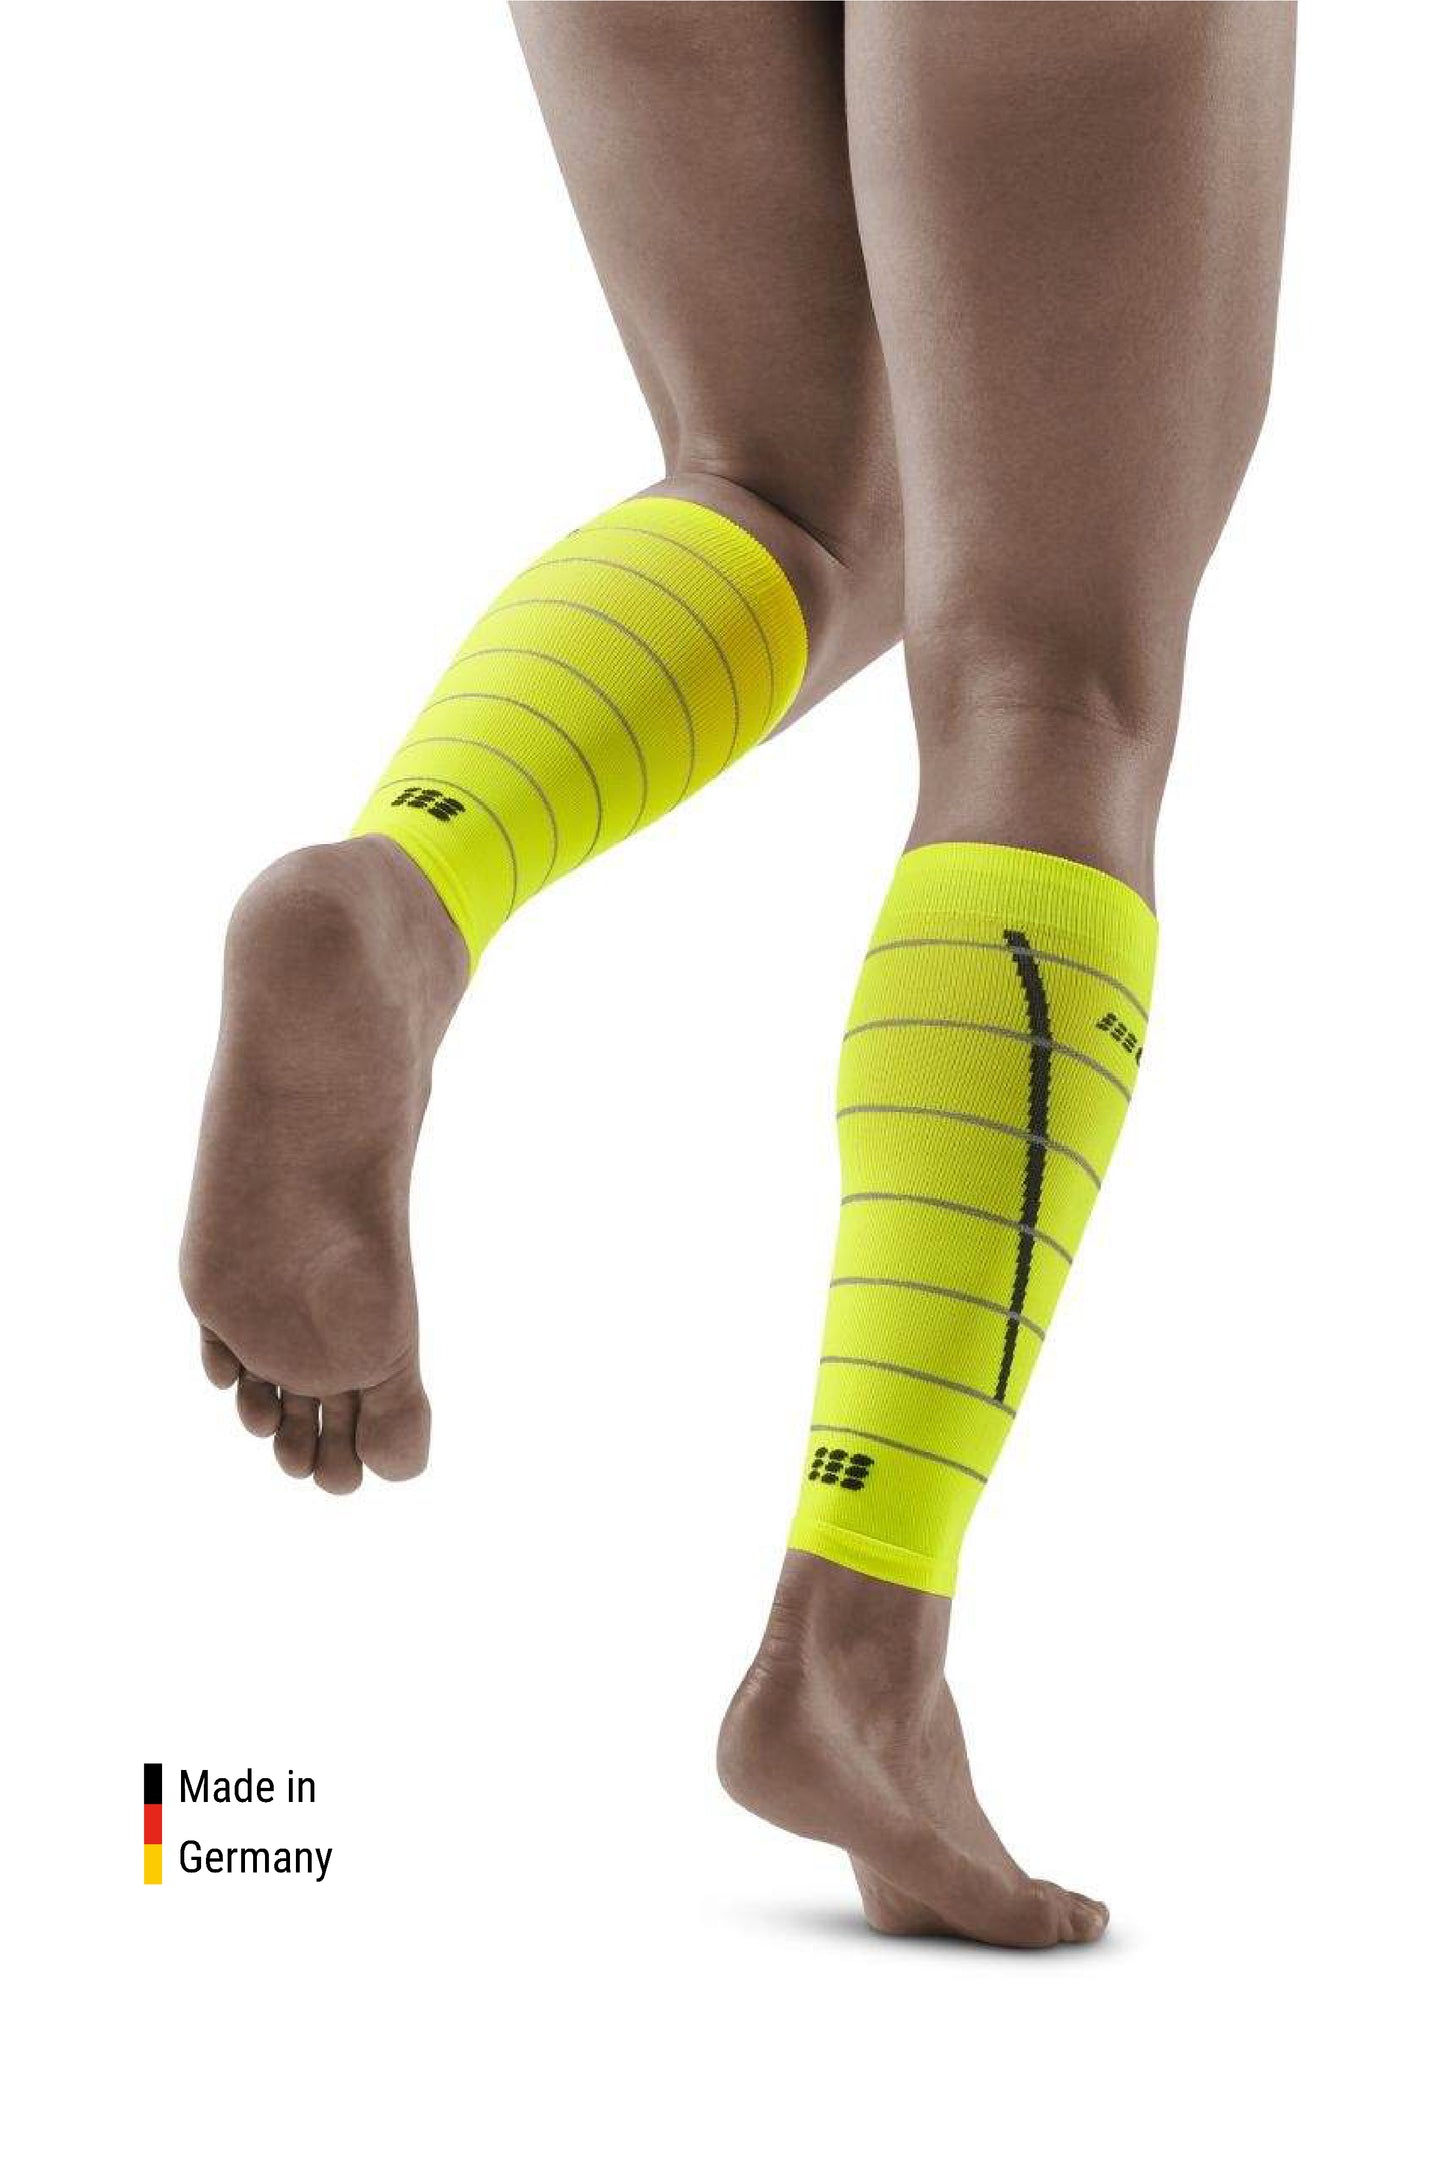 Reflective Compression Socks Calf Sleeves Men